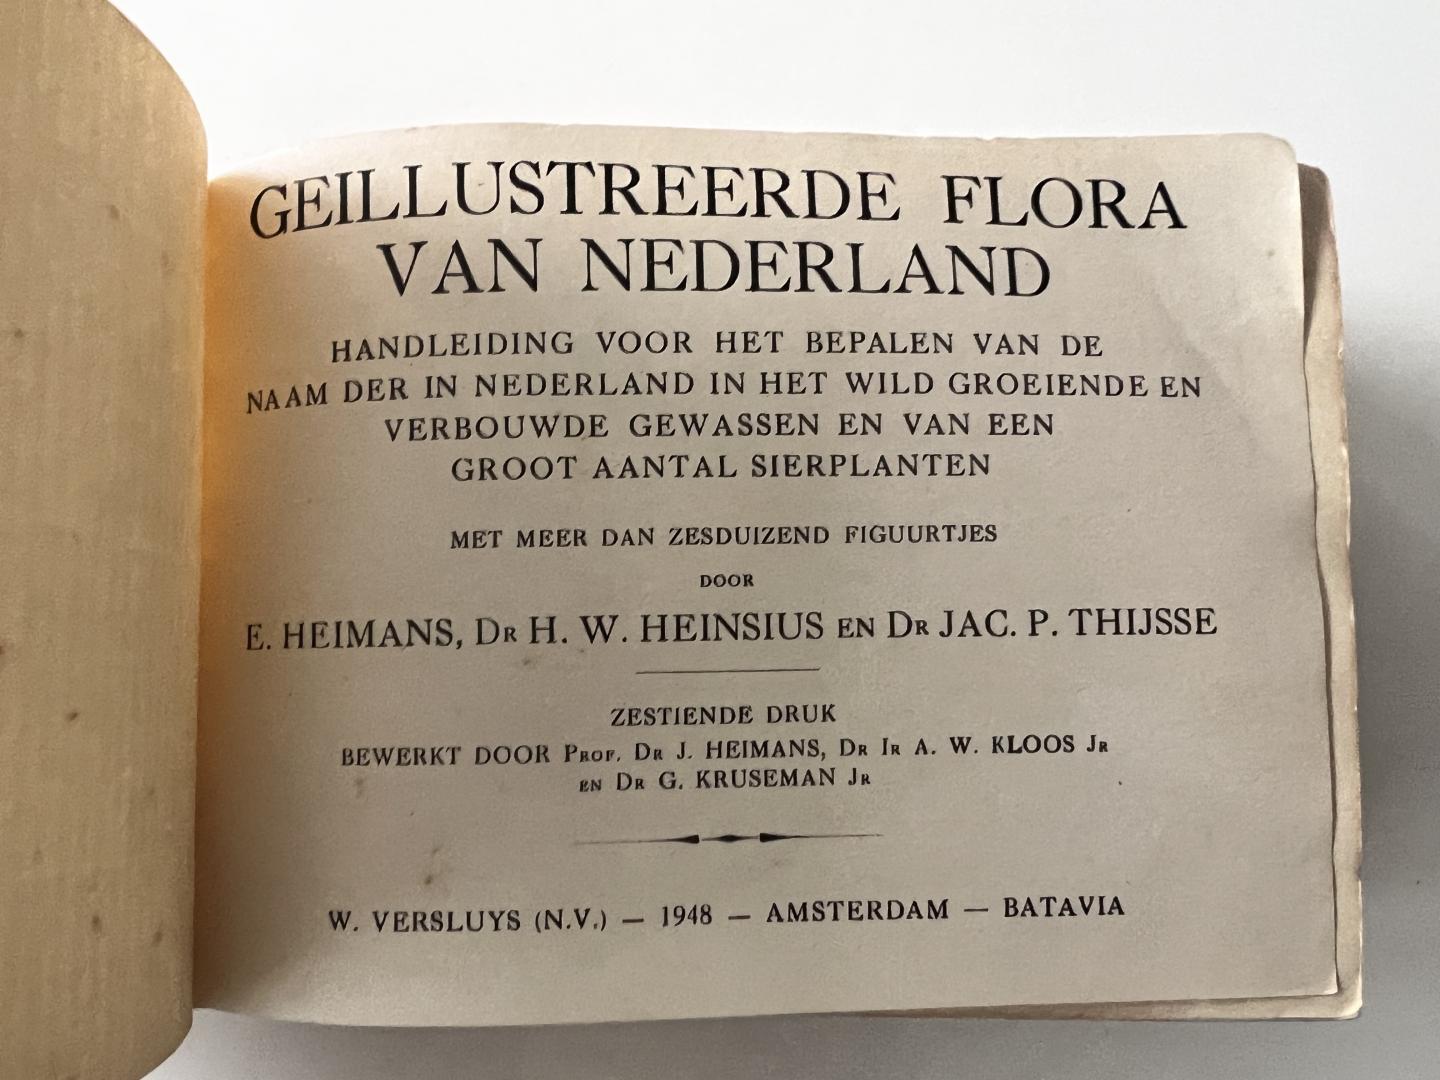 E. Heimans, Dr H.W. Heinsius en Dr Jac. P. Thijsse - Geillustreerde flora van Nederland